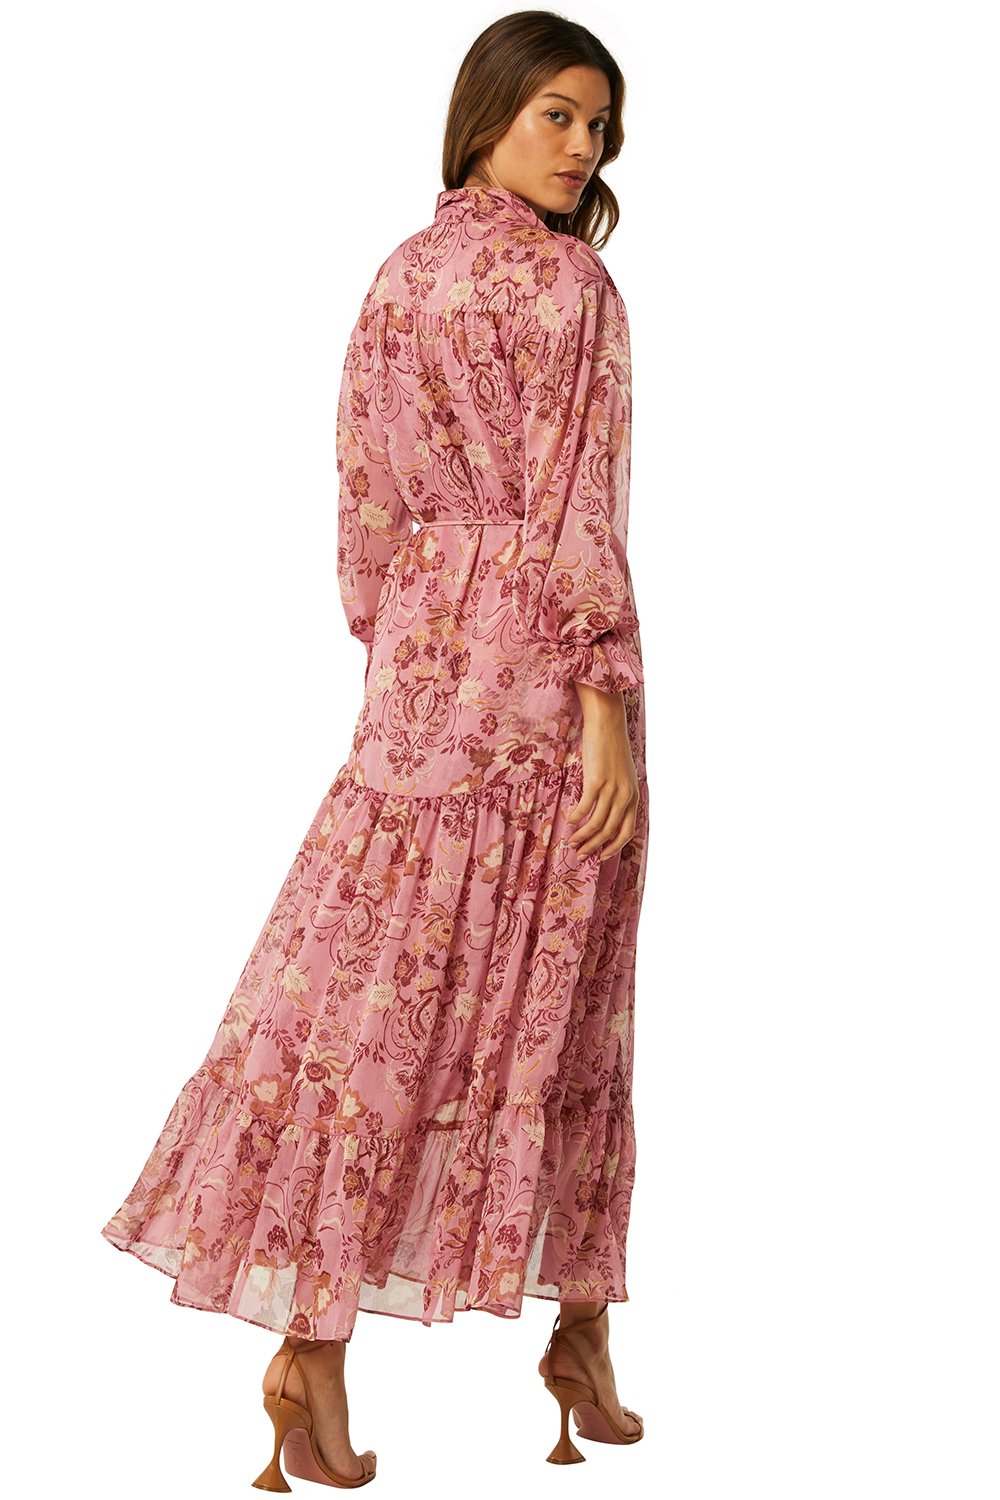 Misa - Leigh Dress in Cristobal Mirror Flower